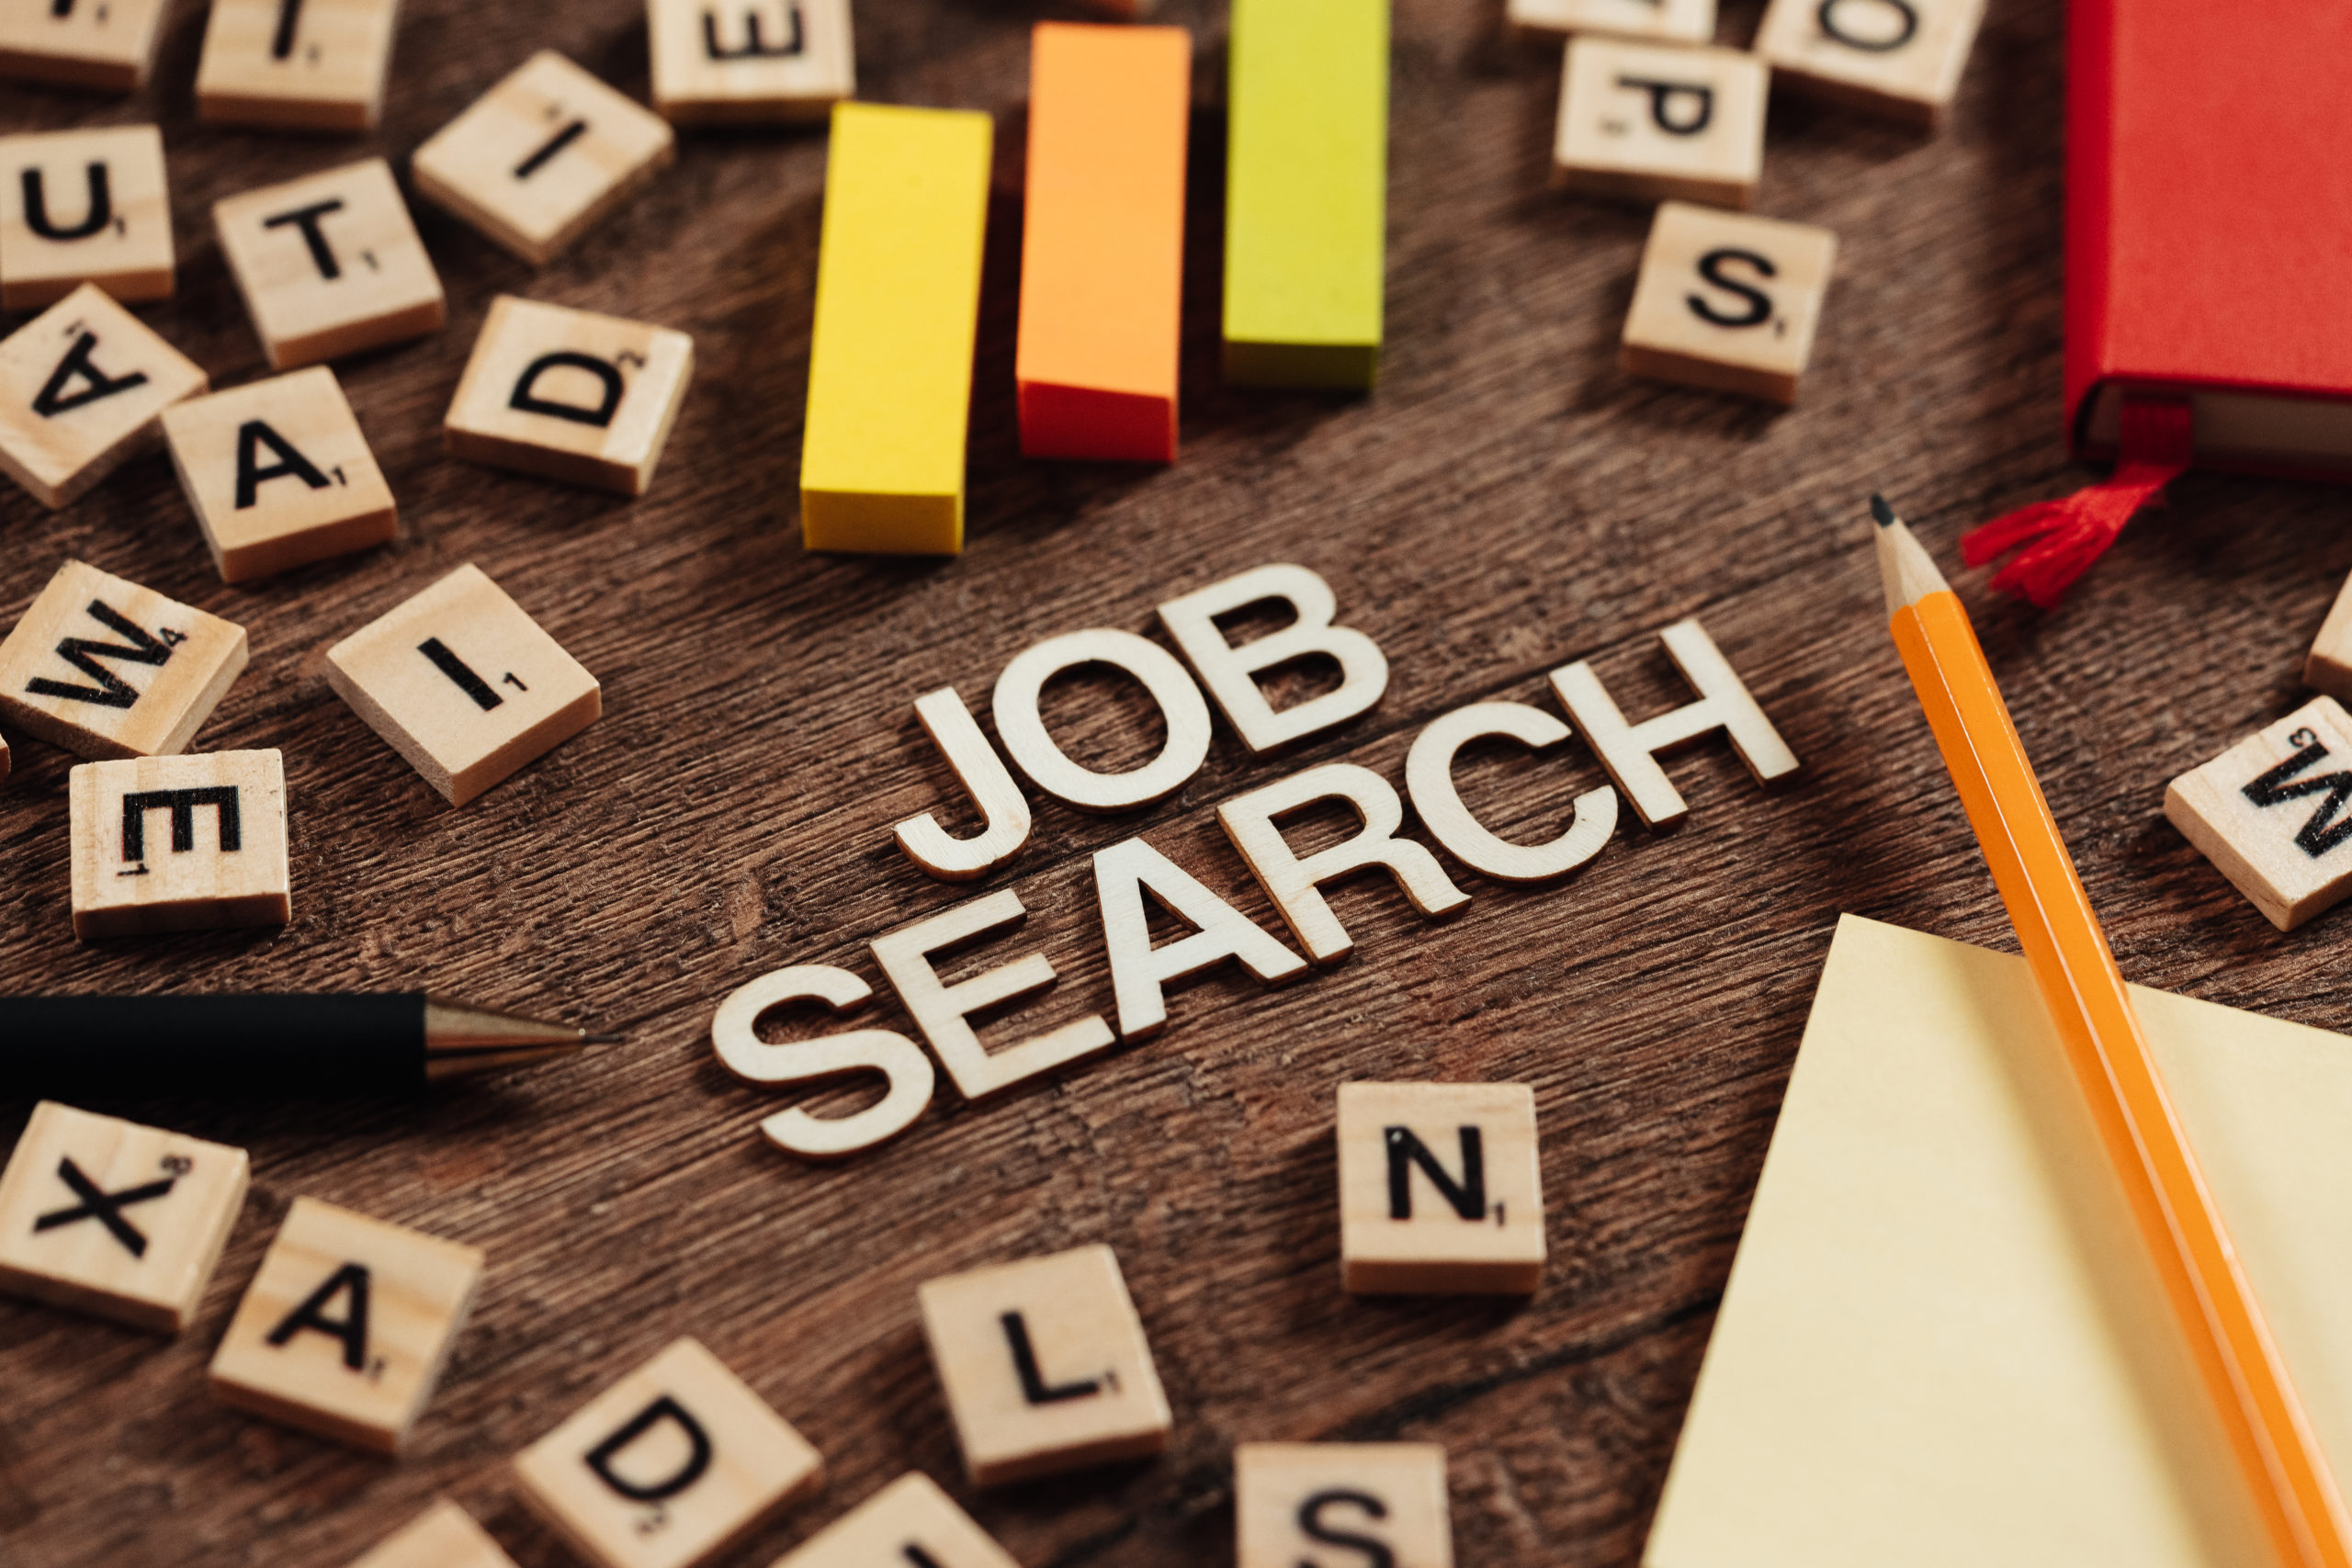 job search website business plan